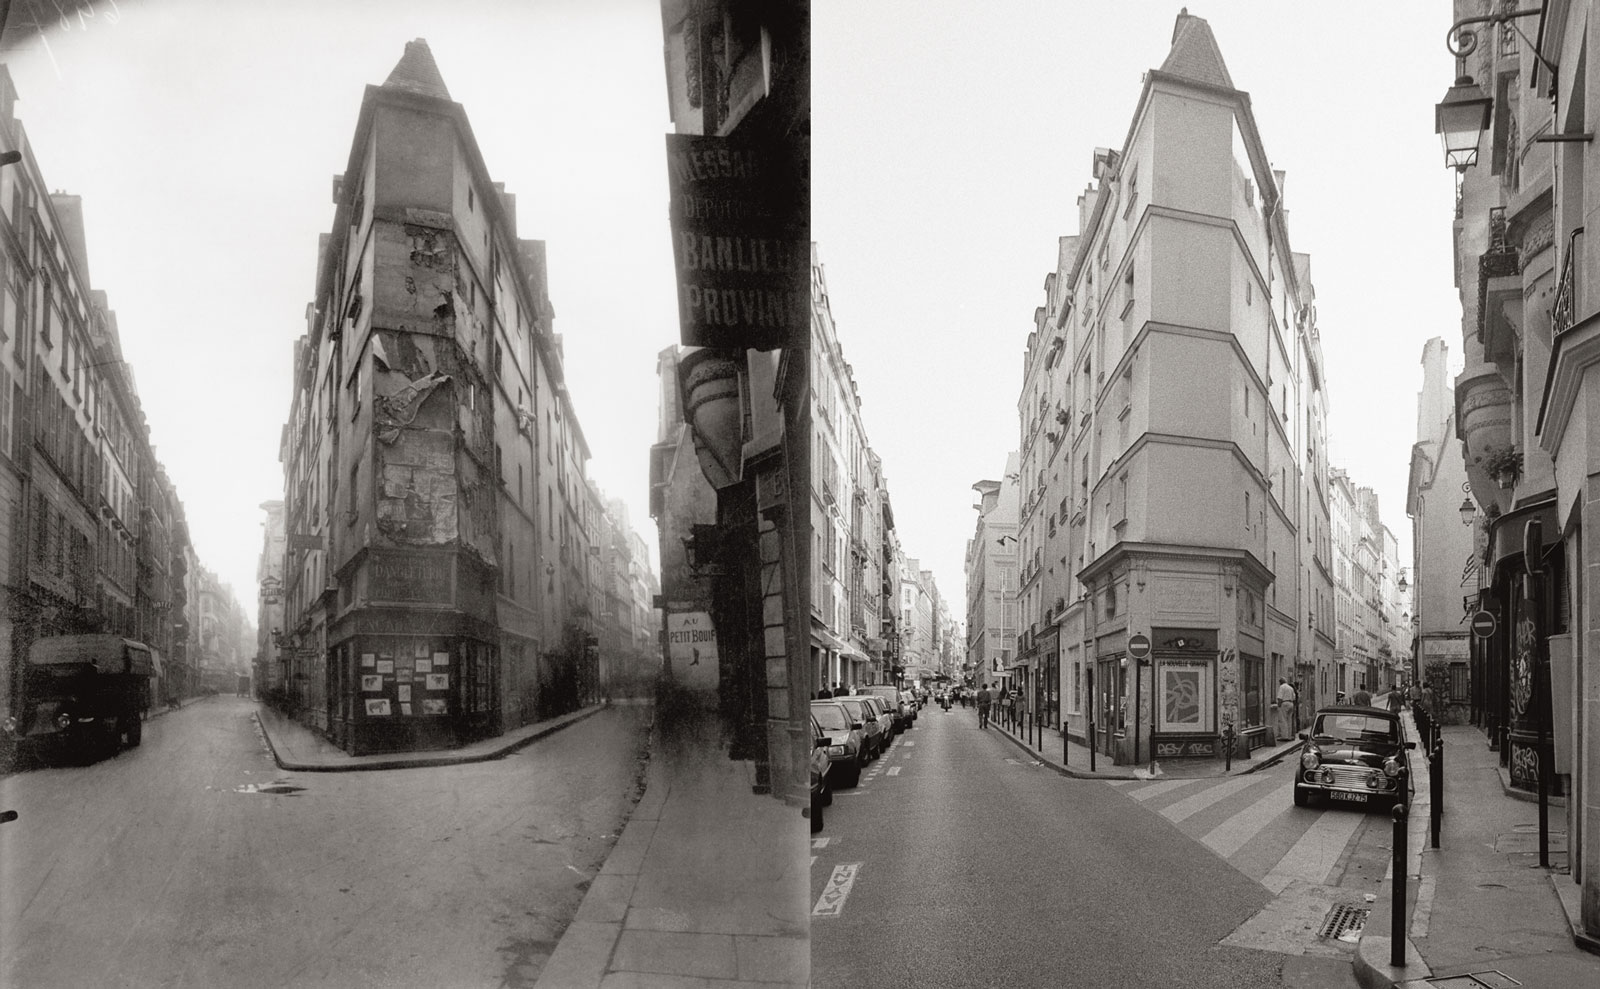 Intersection of rue de Seine and rue de l'Échaudé, circa 1924 by Eugène Atget (left), 1997 by Christopher Rauschenberg (right), from the new paperback edition of Christopher Rauschenberg's <em>Paris Changing: Revisiting Eugène Atget’s Paris</em>, 2016